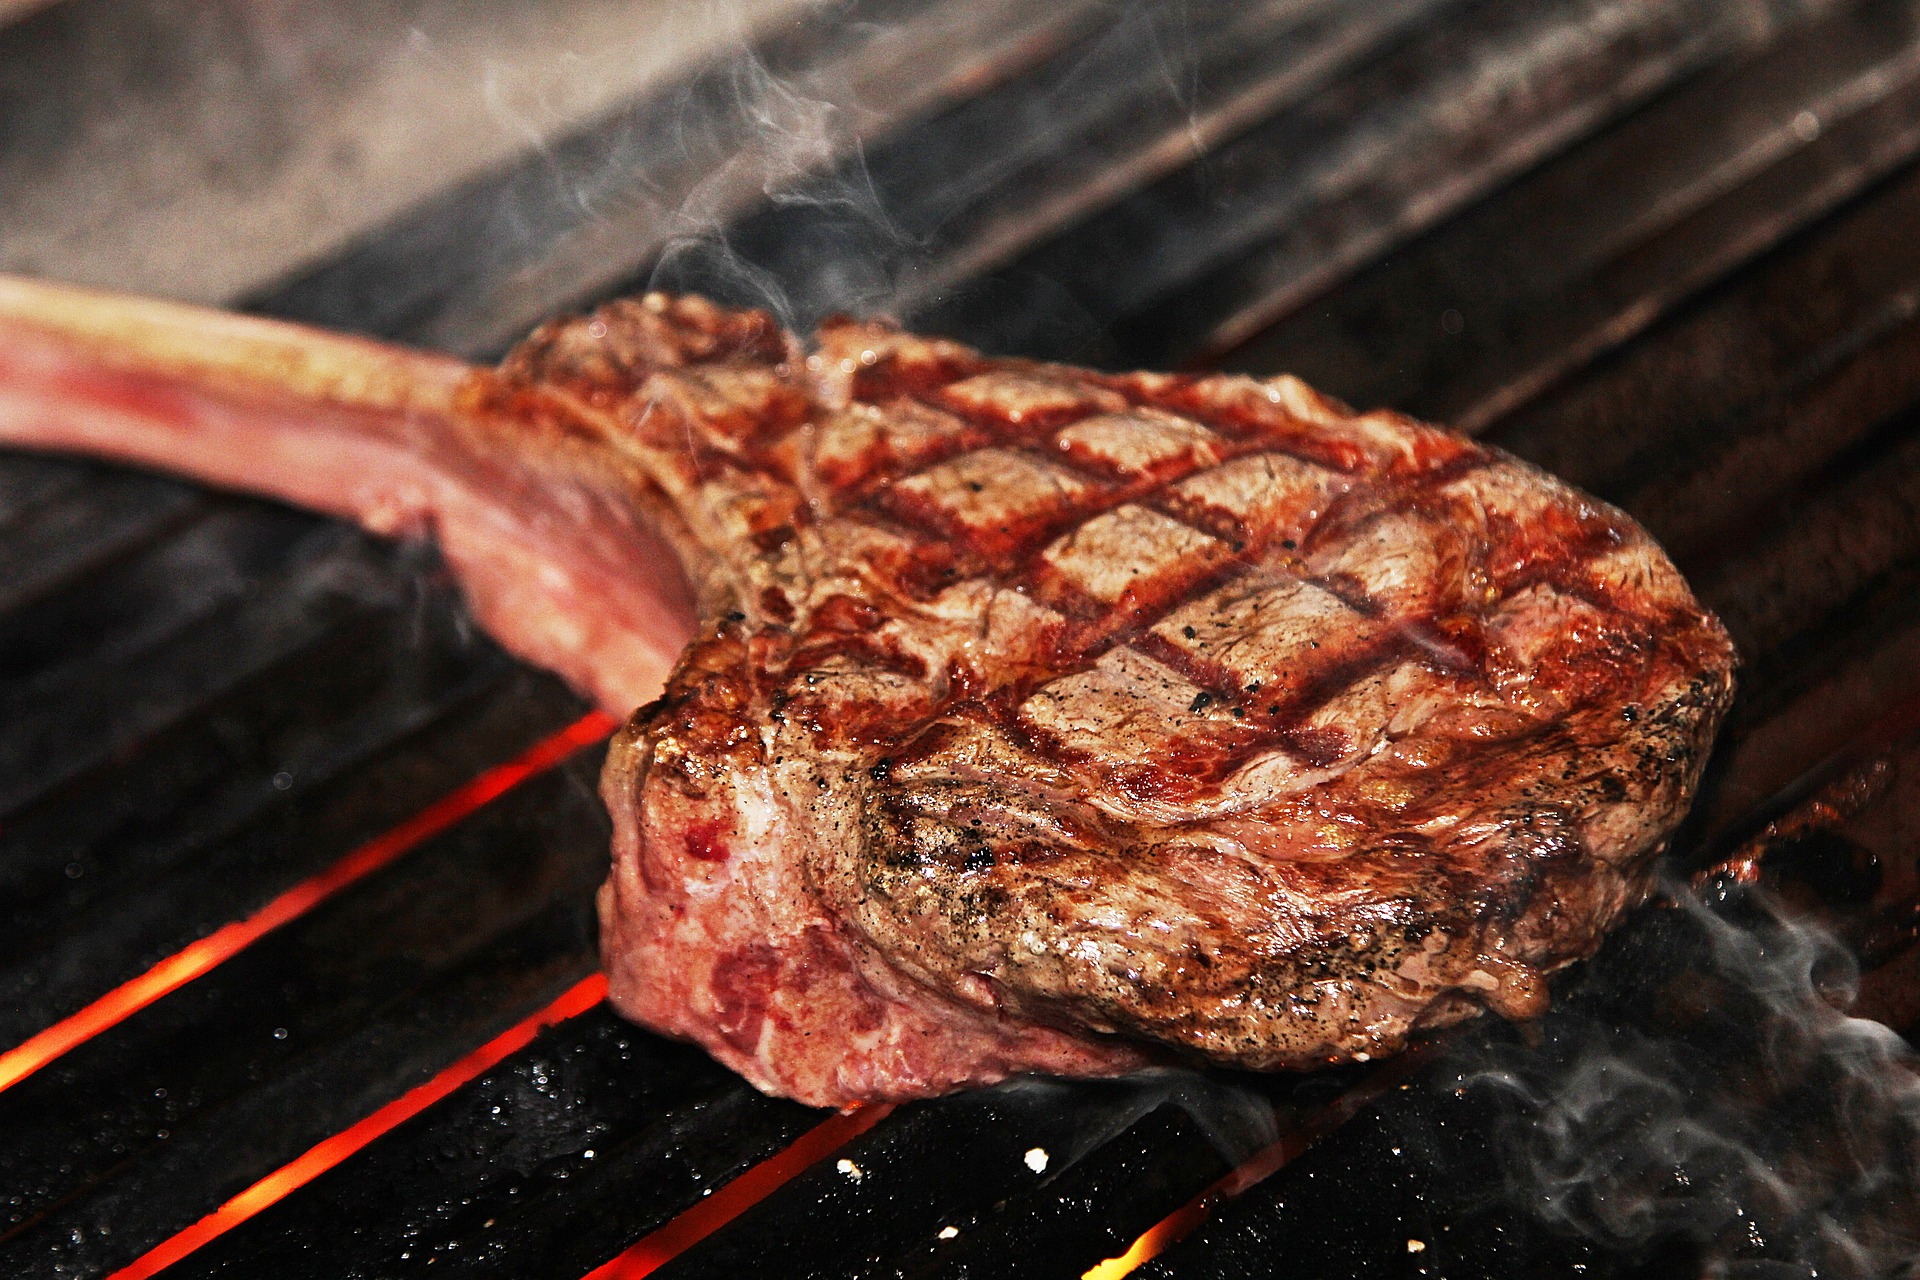 Entrecôte grillen – so gelingt das Gourmet-Steak